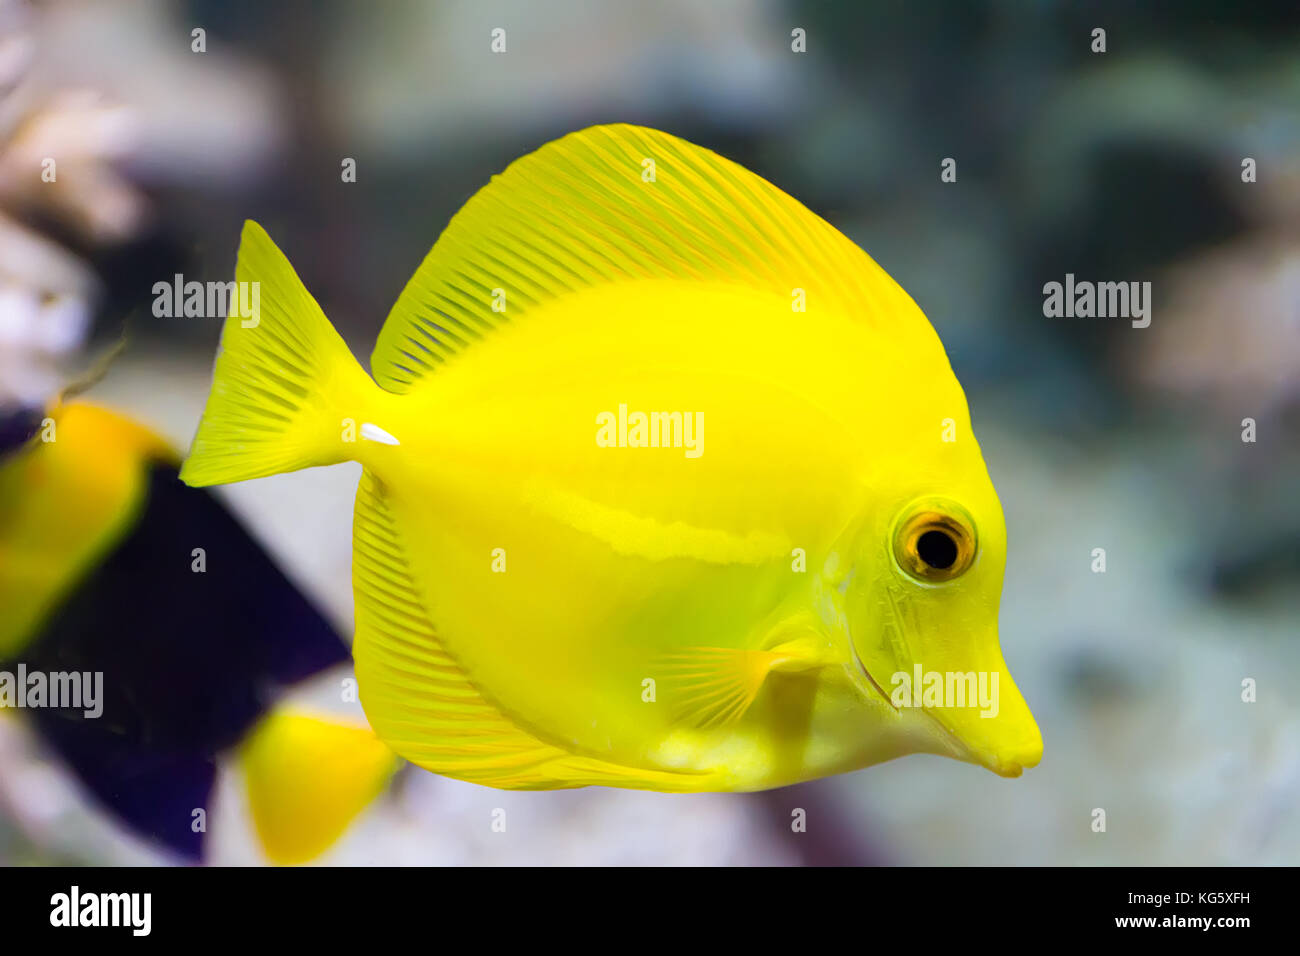 Image of zebrasoma yellow tang fish in aquarium Stock Photo